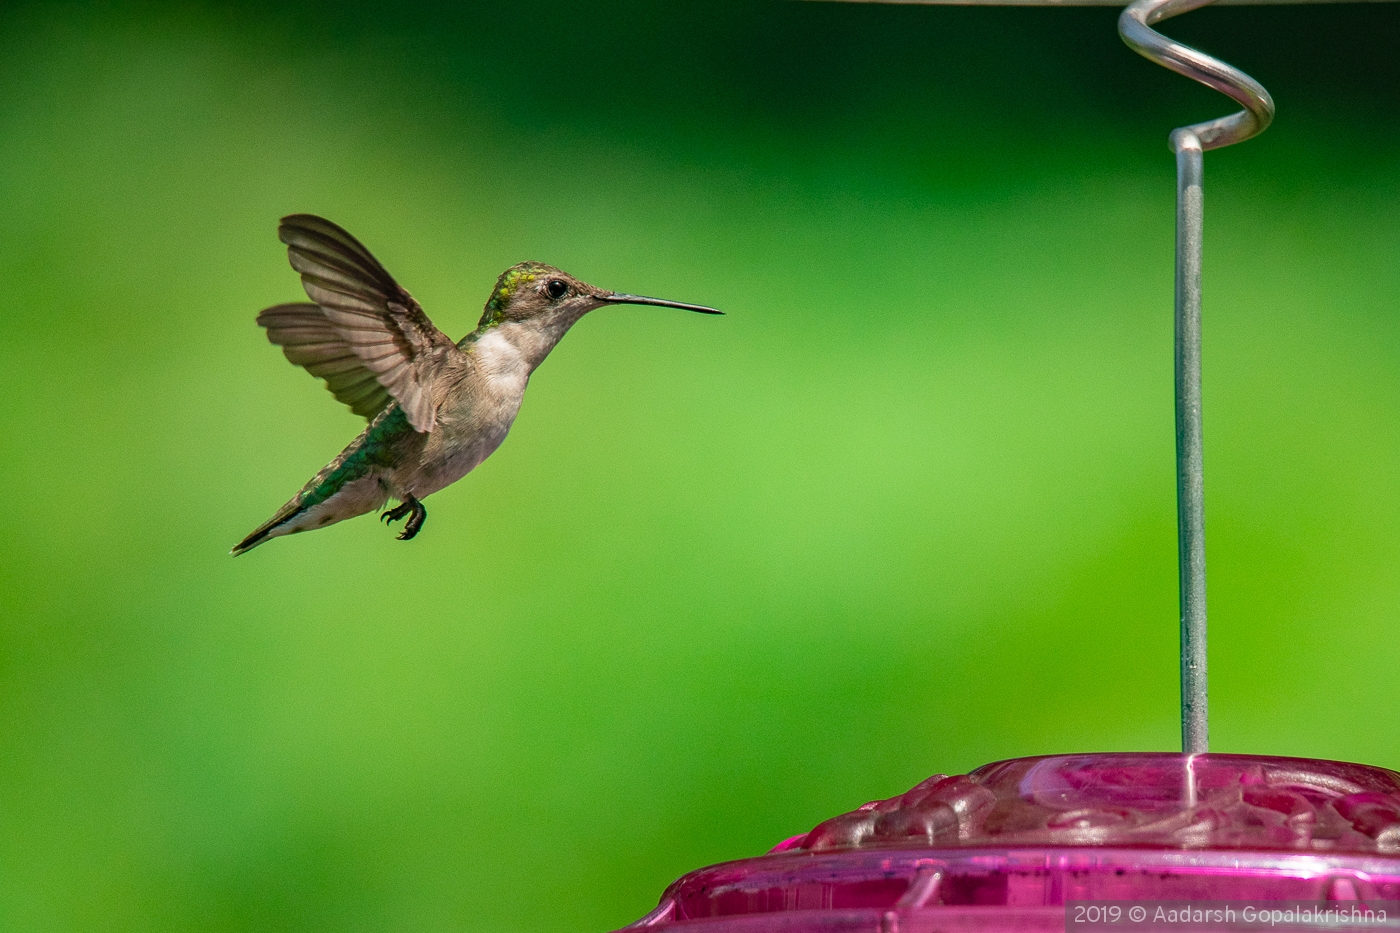 Ruby throated hummingbird in flight by Aadarsh Gopalakrishna